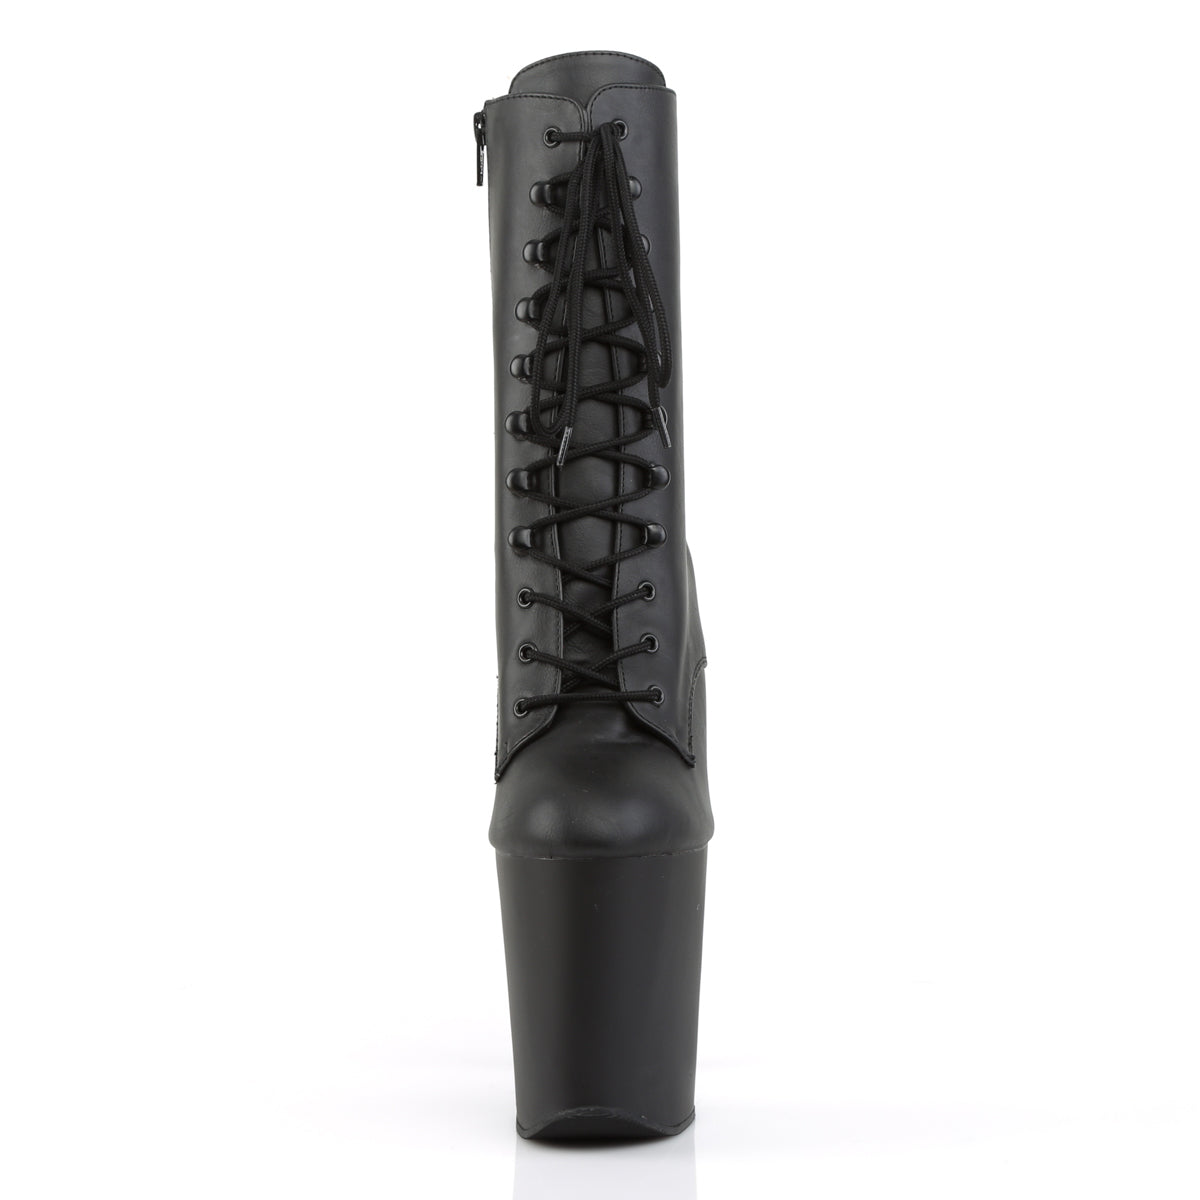 Xtreme-1020 Black PU Boots